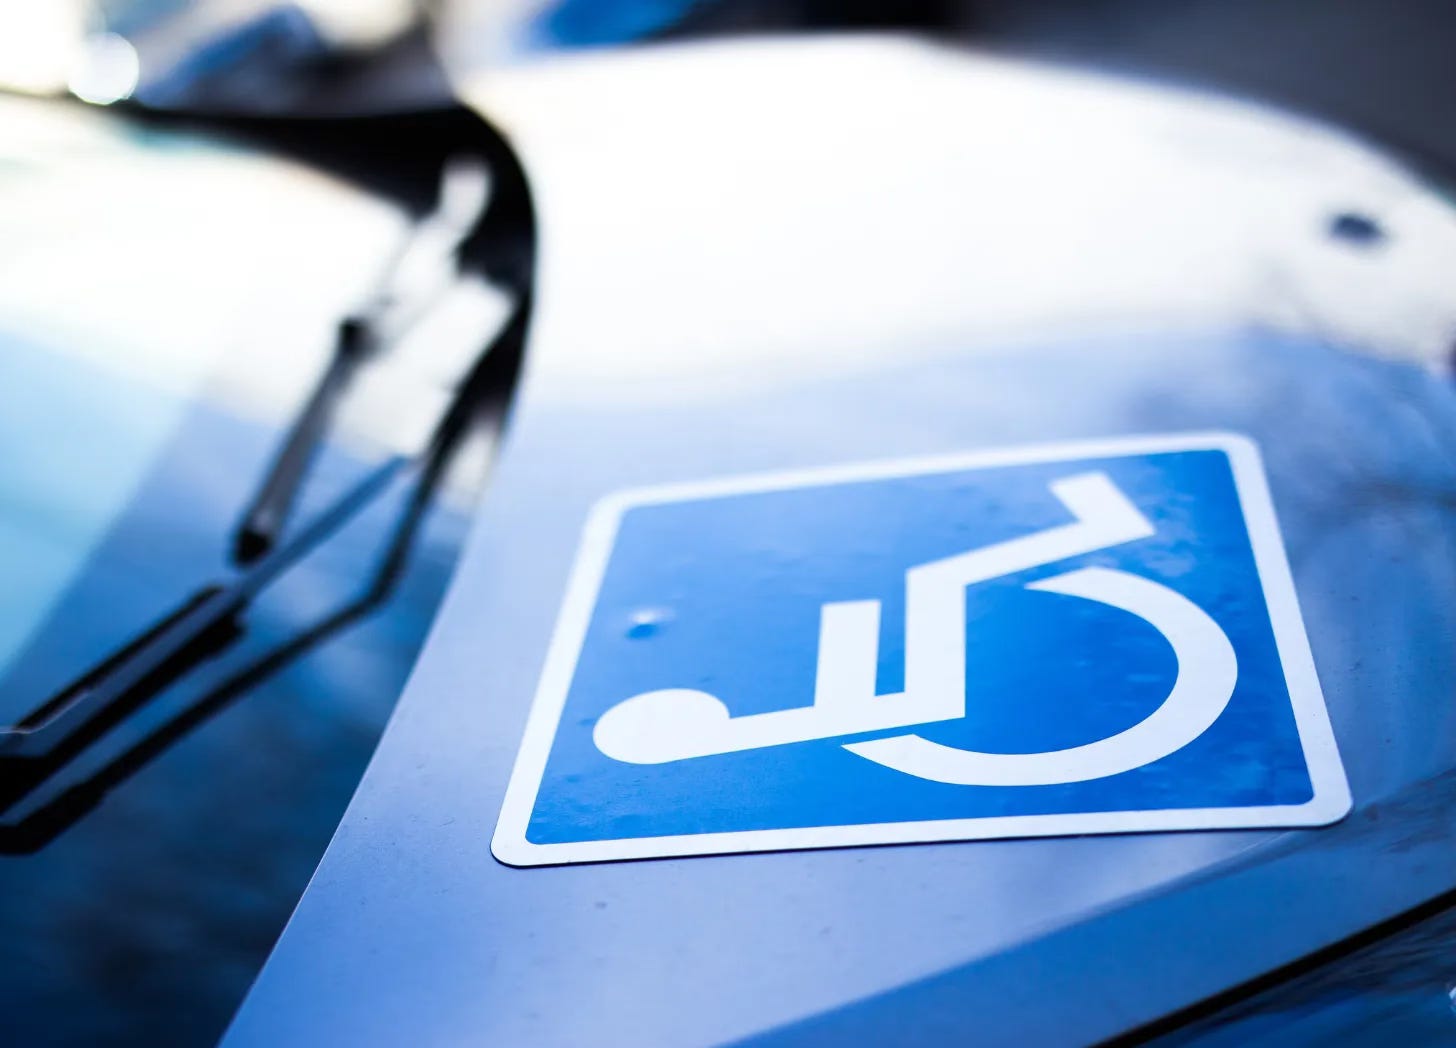 Wheelchair symbol sign stuck to a car's hood